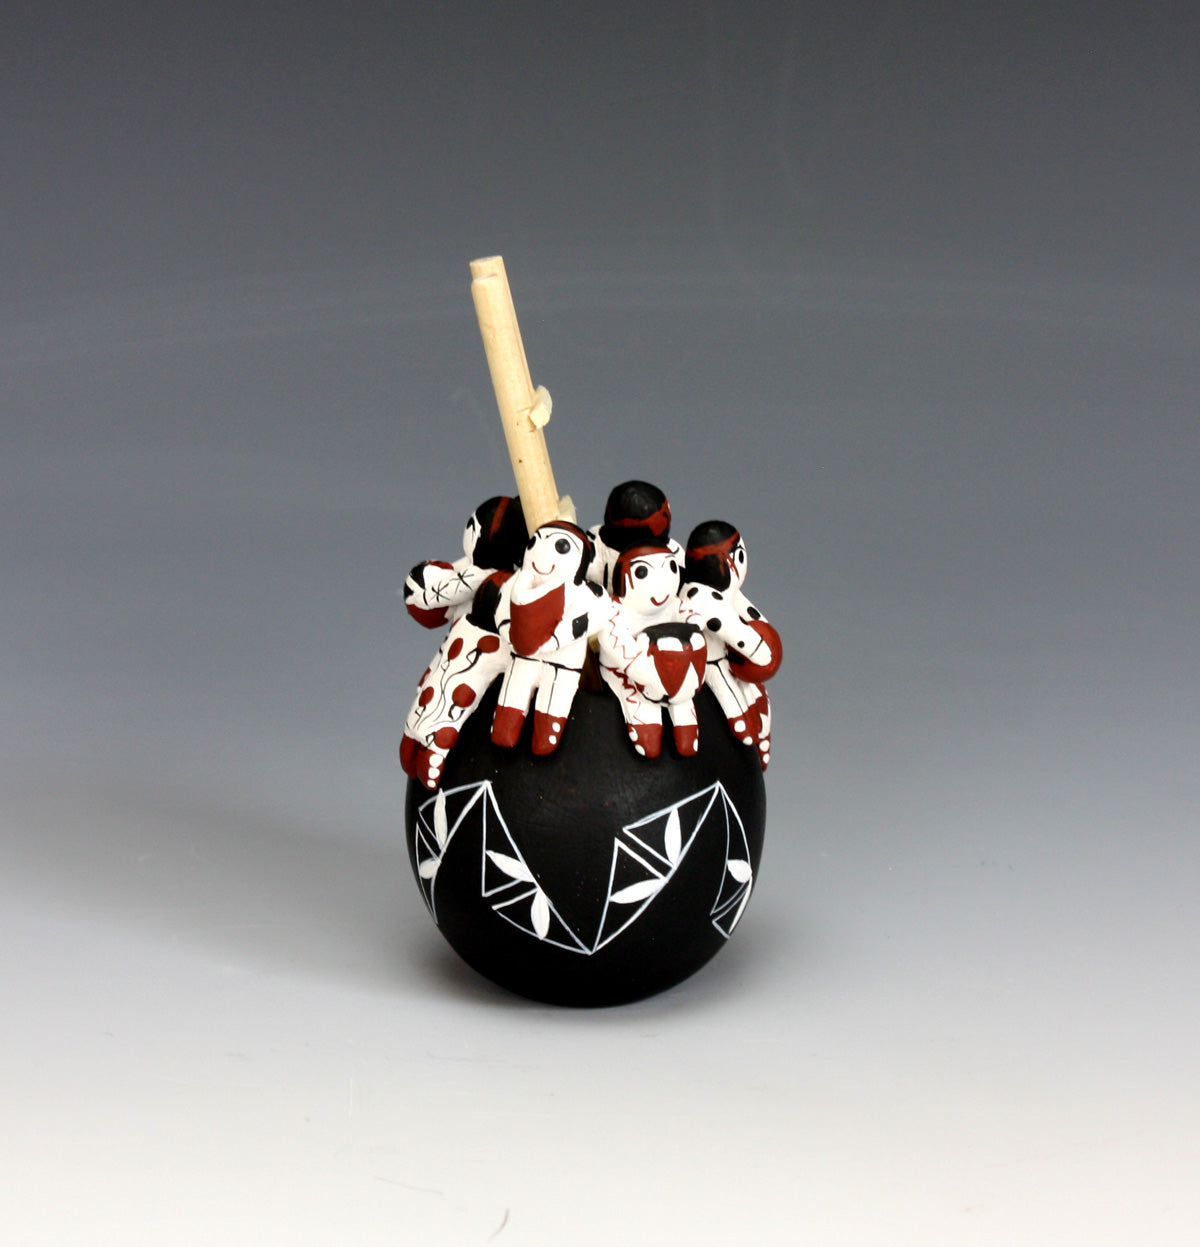 Cochiti Pueblo Native American Indian Pottery Friendship Pot #2 - Vangie Suina